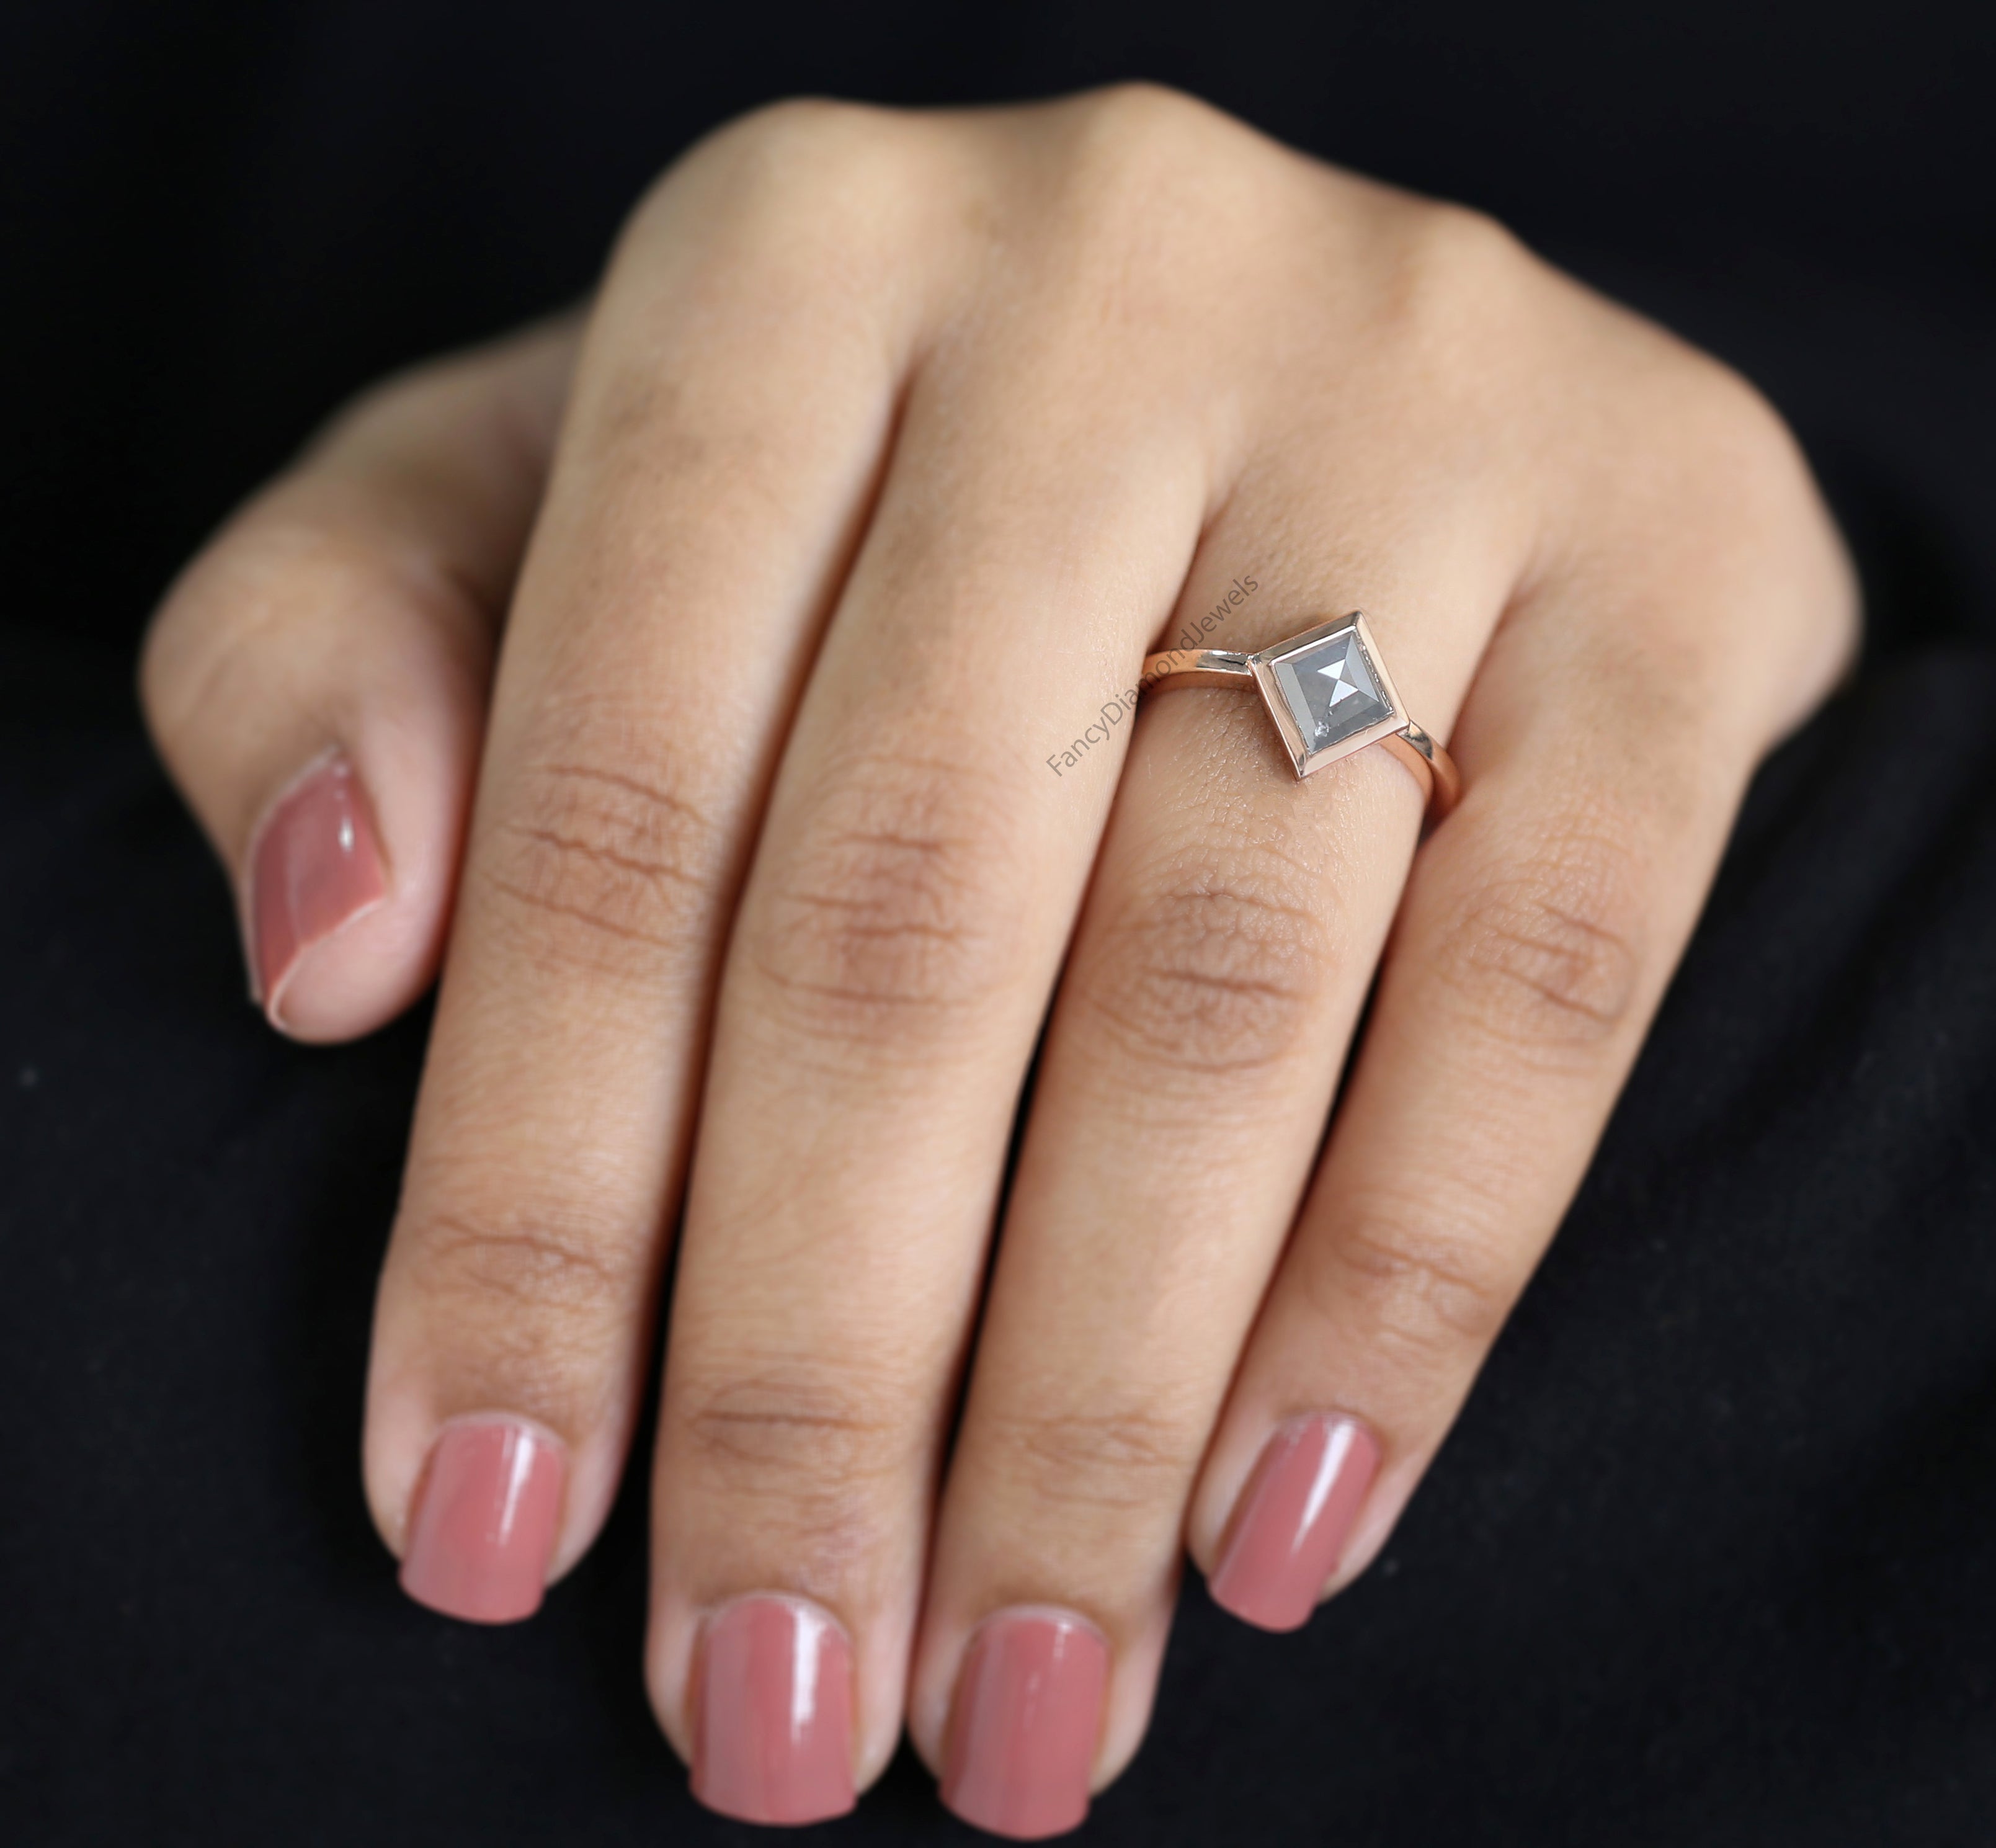 Kite Cut Salt And Pepper Diamond Ring 1.00 Ct 9.10 MM Kite Diamond Ring 14K Solid Rose Gold Silver Kite Engagement Ring Gift For Her QL7955